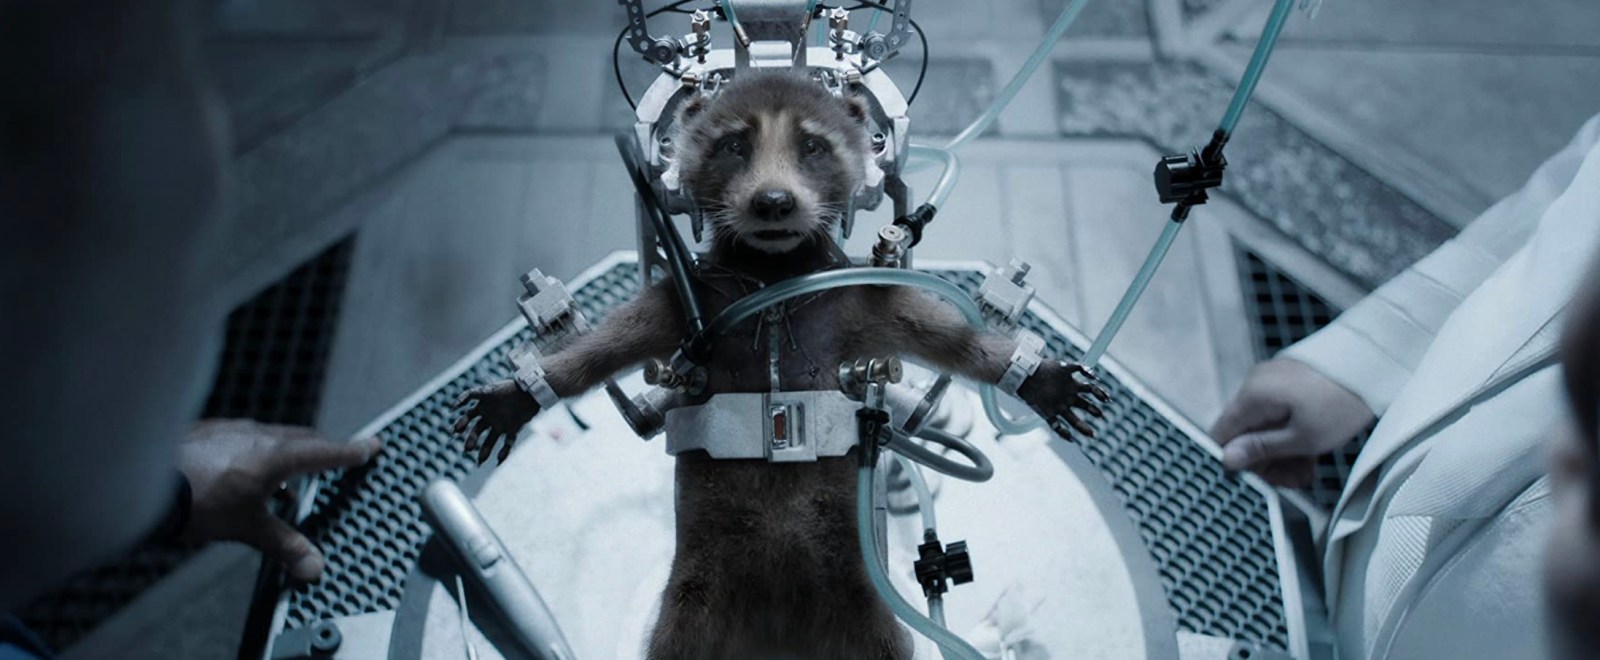 Bradley Cooper as Rocket Raccoon in 'Guardians of the Galaxy Vol. 3'on in